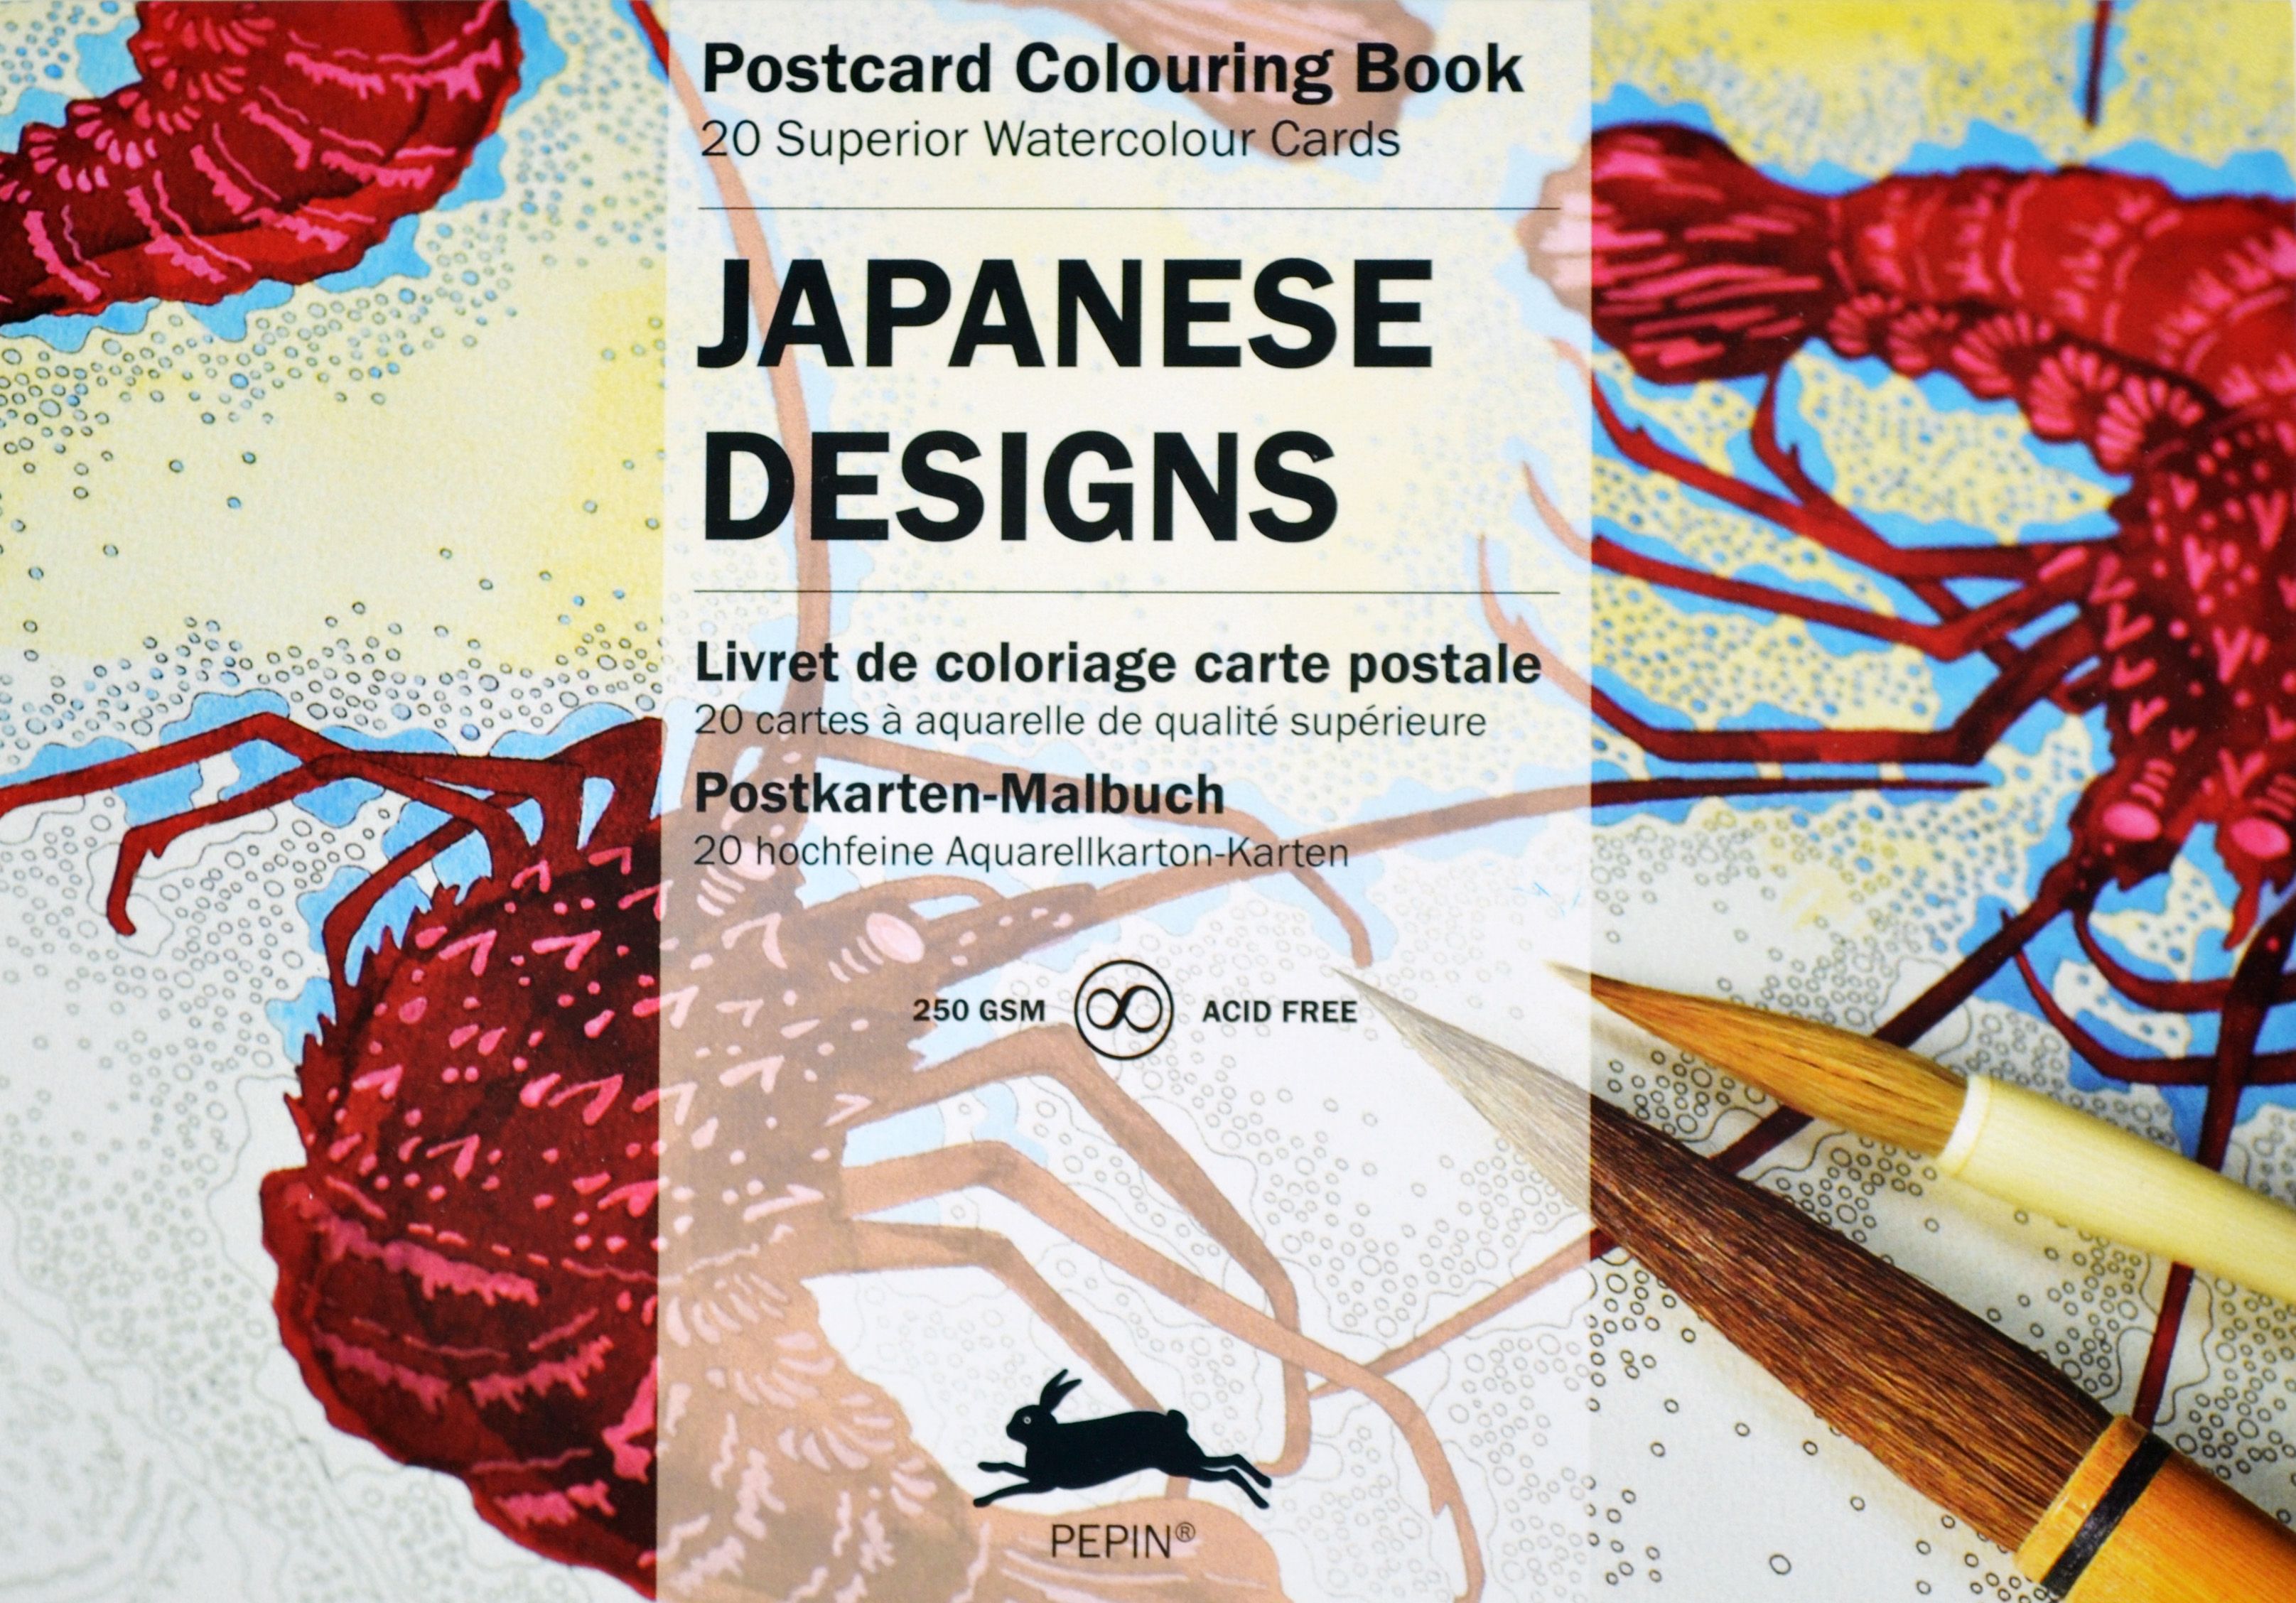 JAPANESE DESIGNS: PEPIN POSTCARD COLOURING BOOK